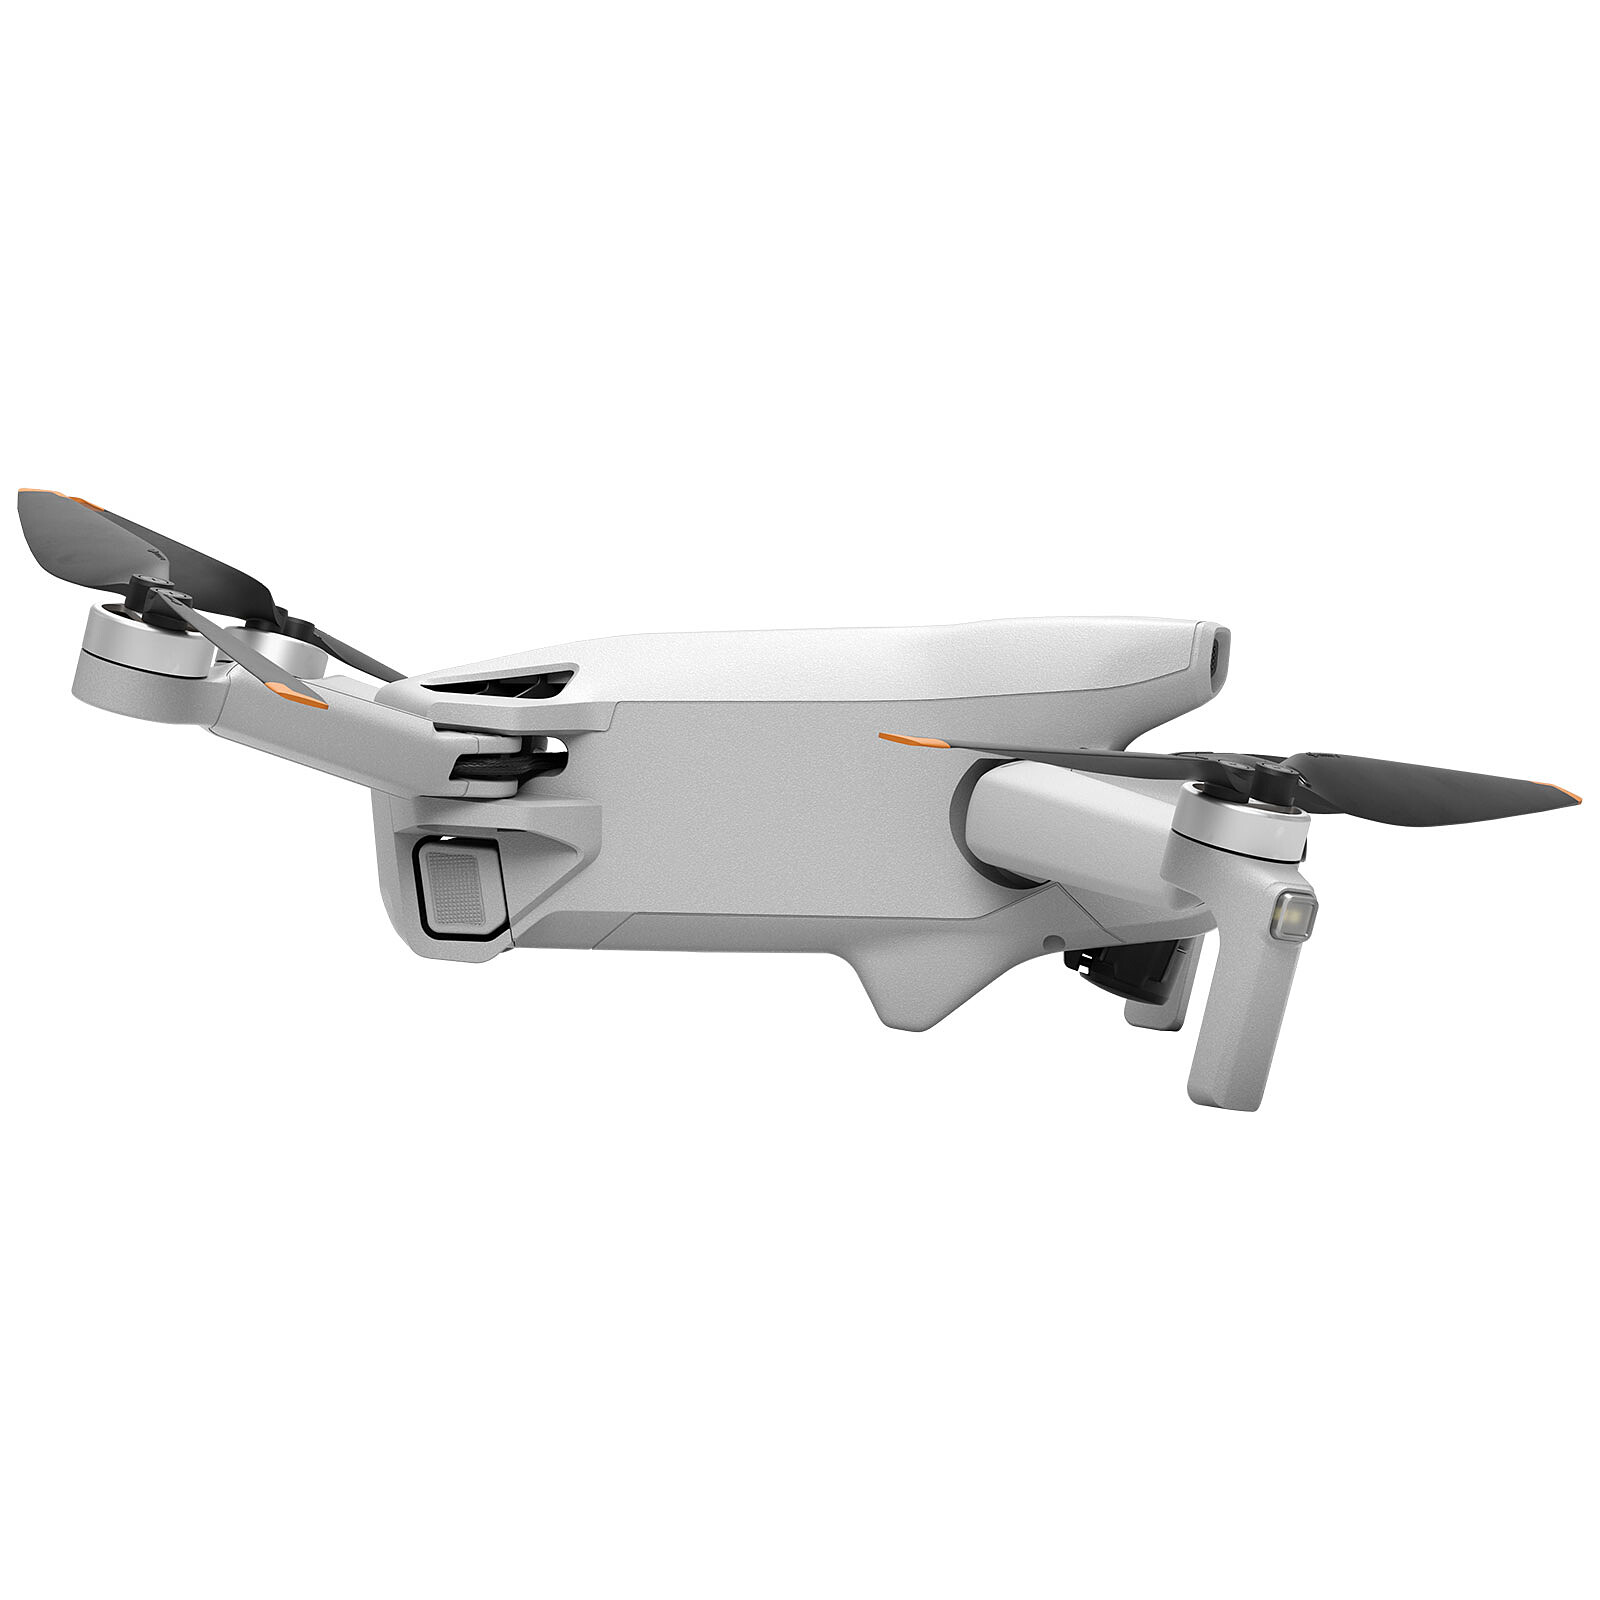 DJI Mini 3 Pro - Drone - Garantie 3 ans LDLC